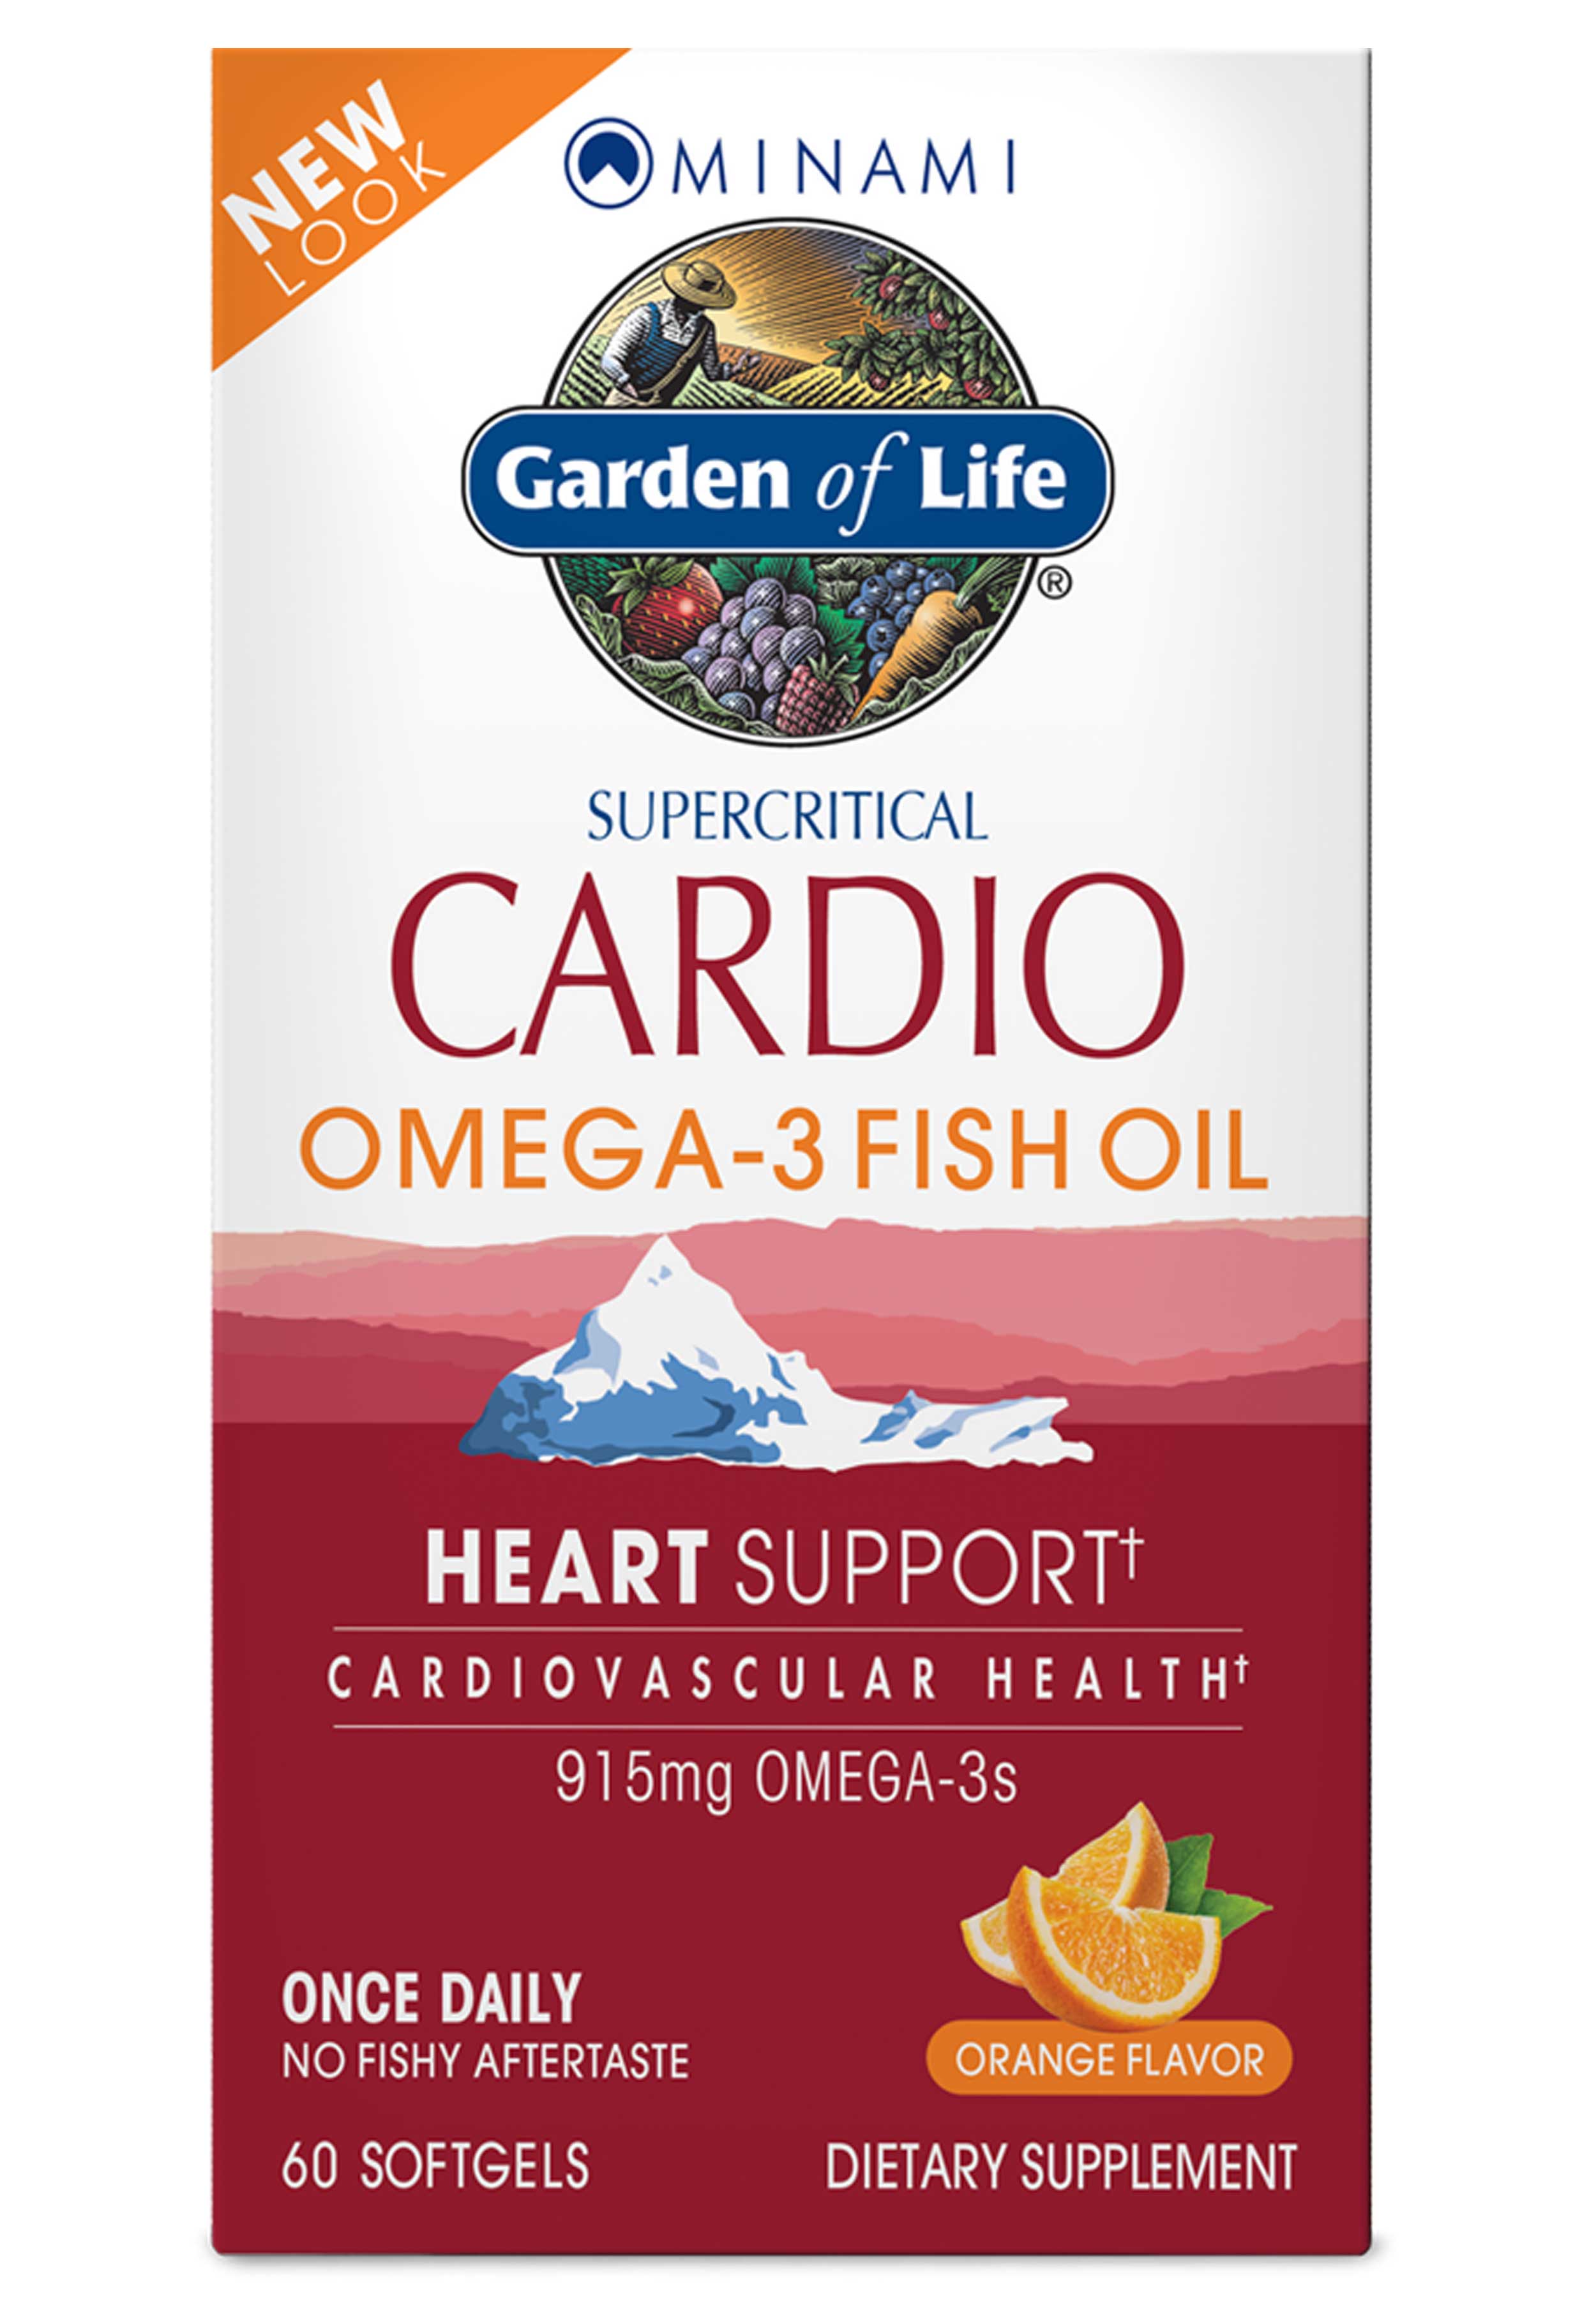 Garden of Life Minami Cardio Omega-3 Fish Oil